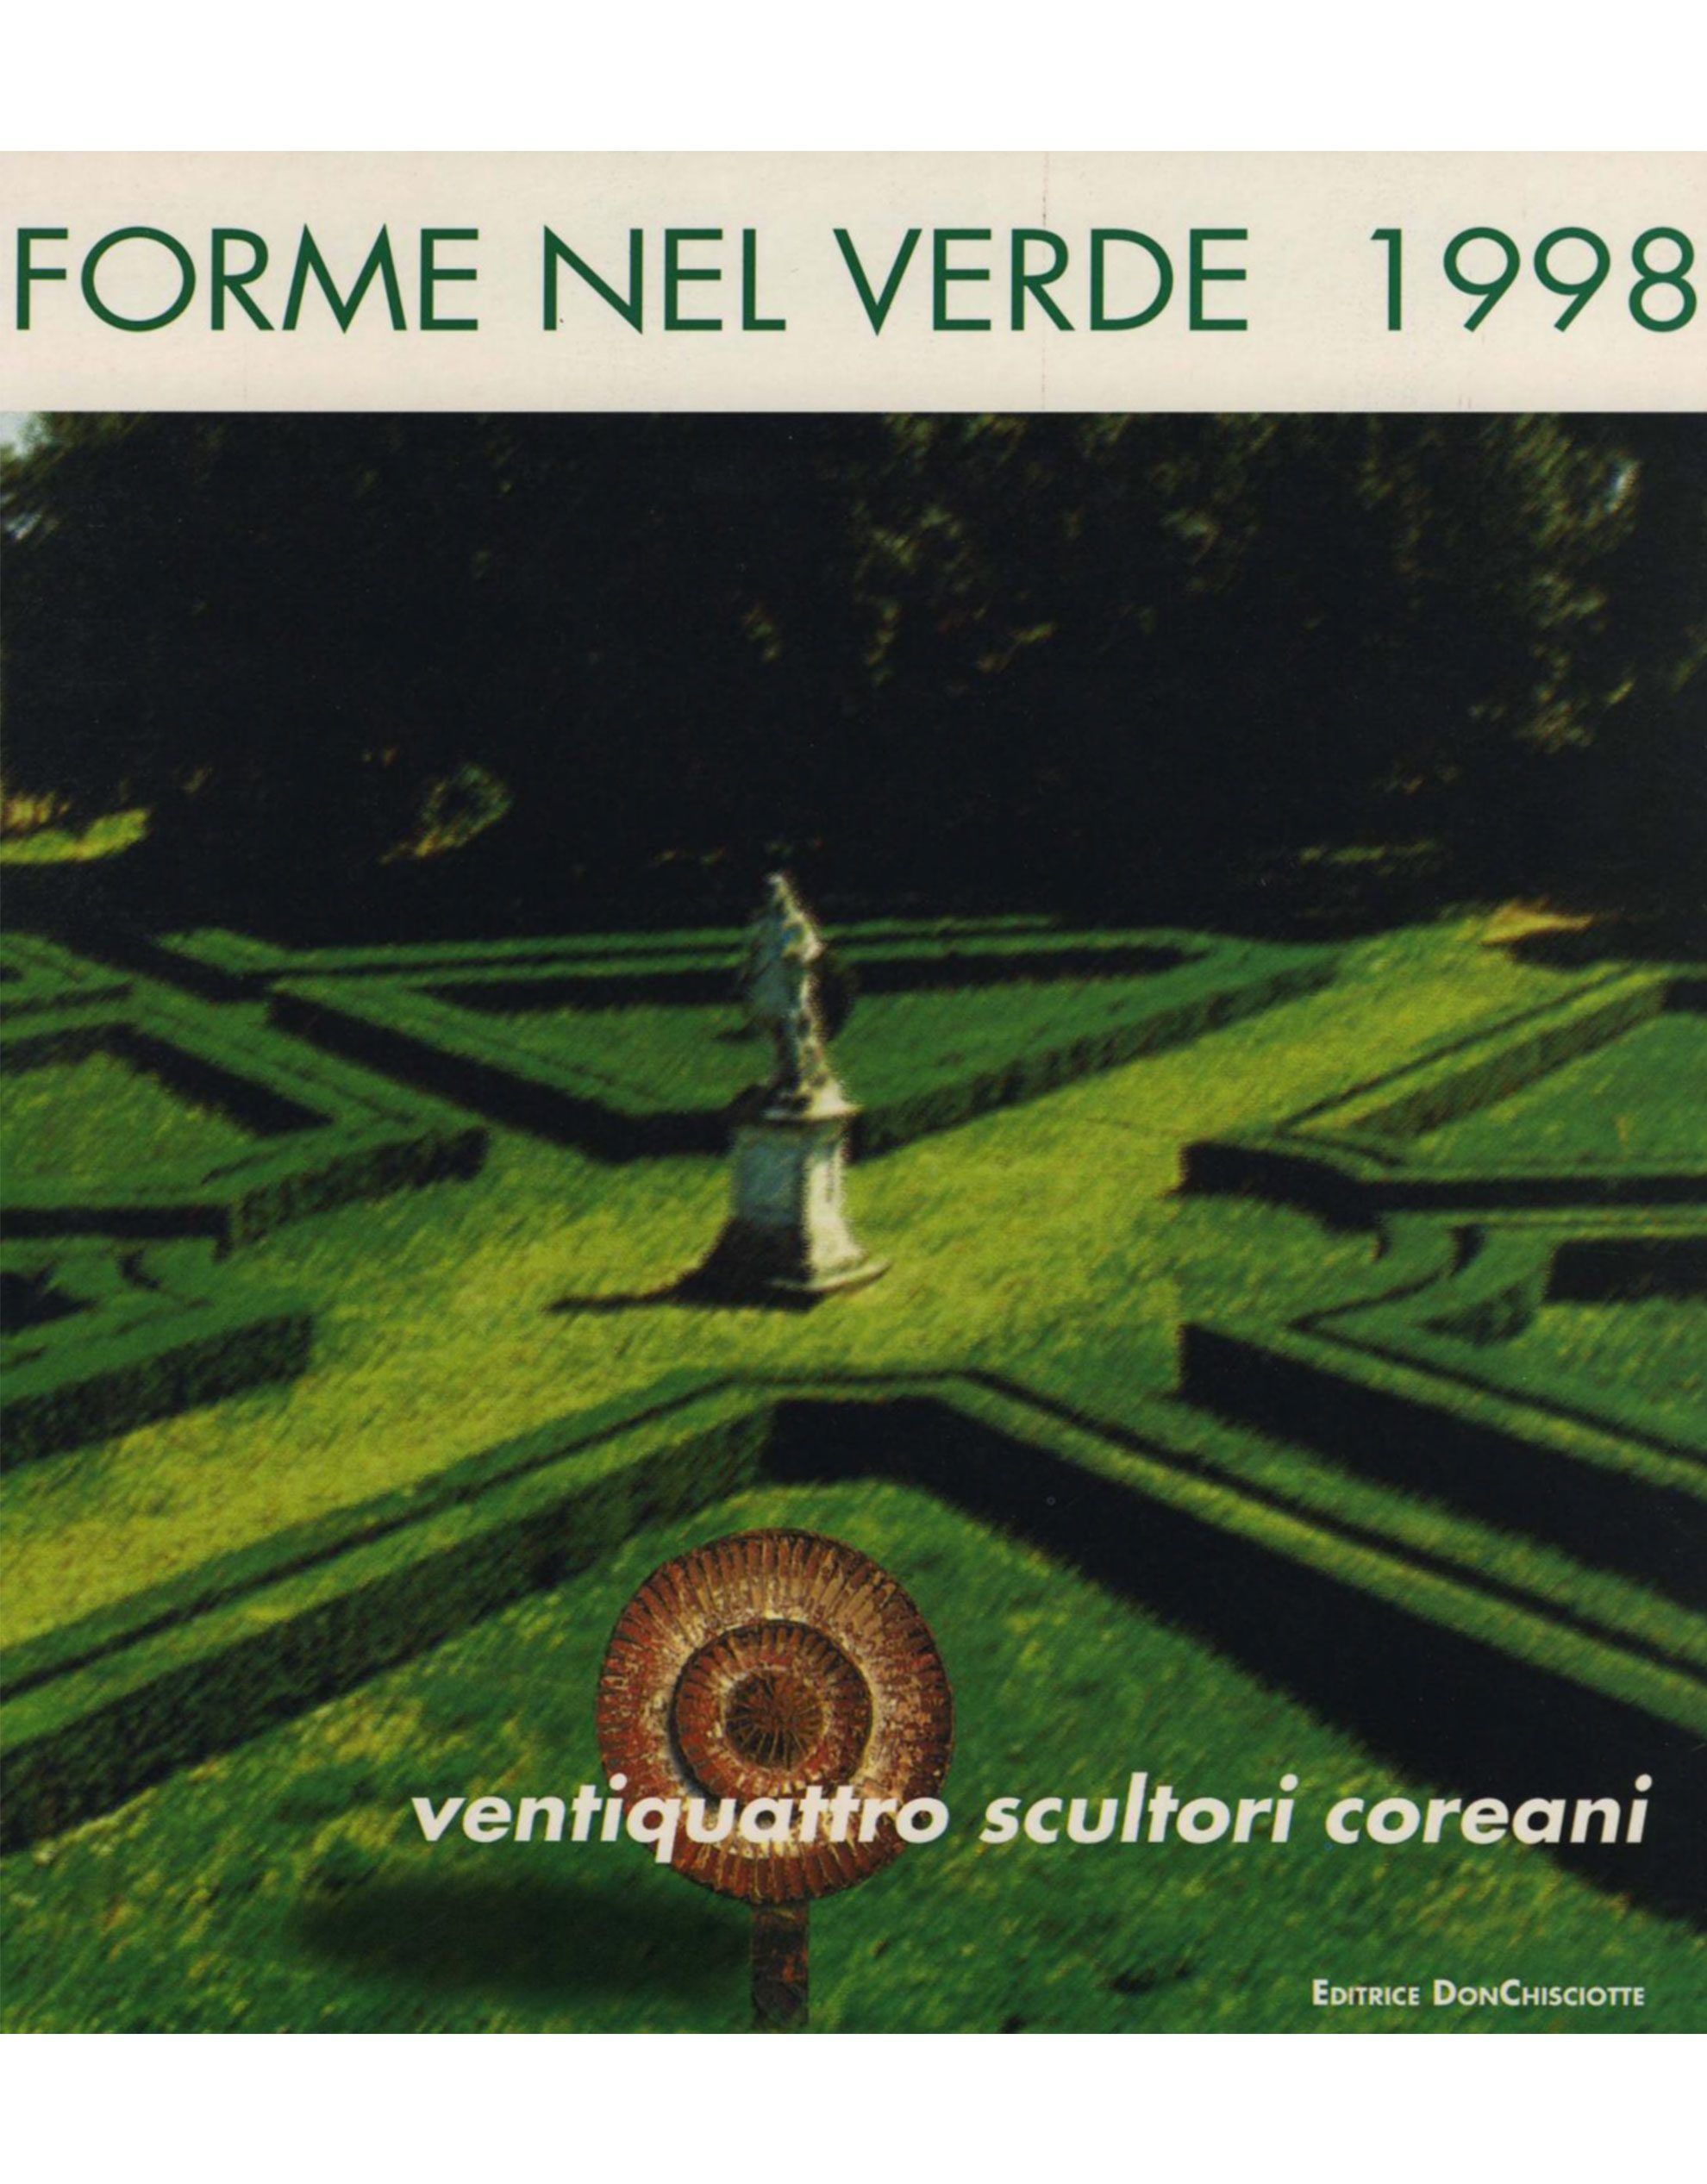 Catalogo Forme nel Verde 1998